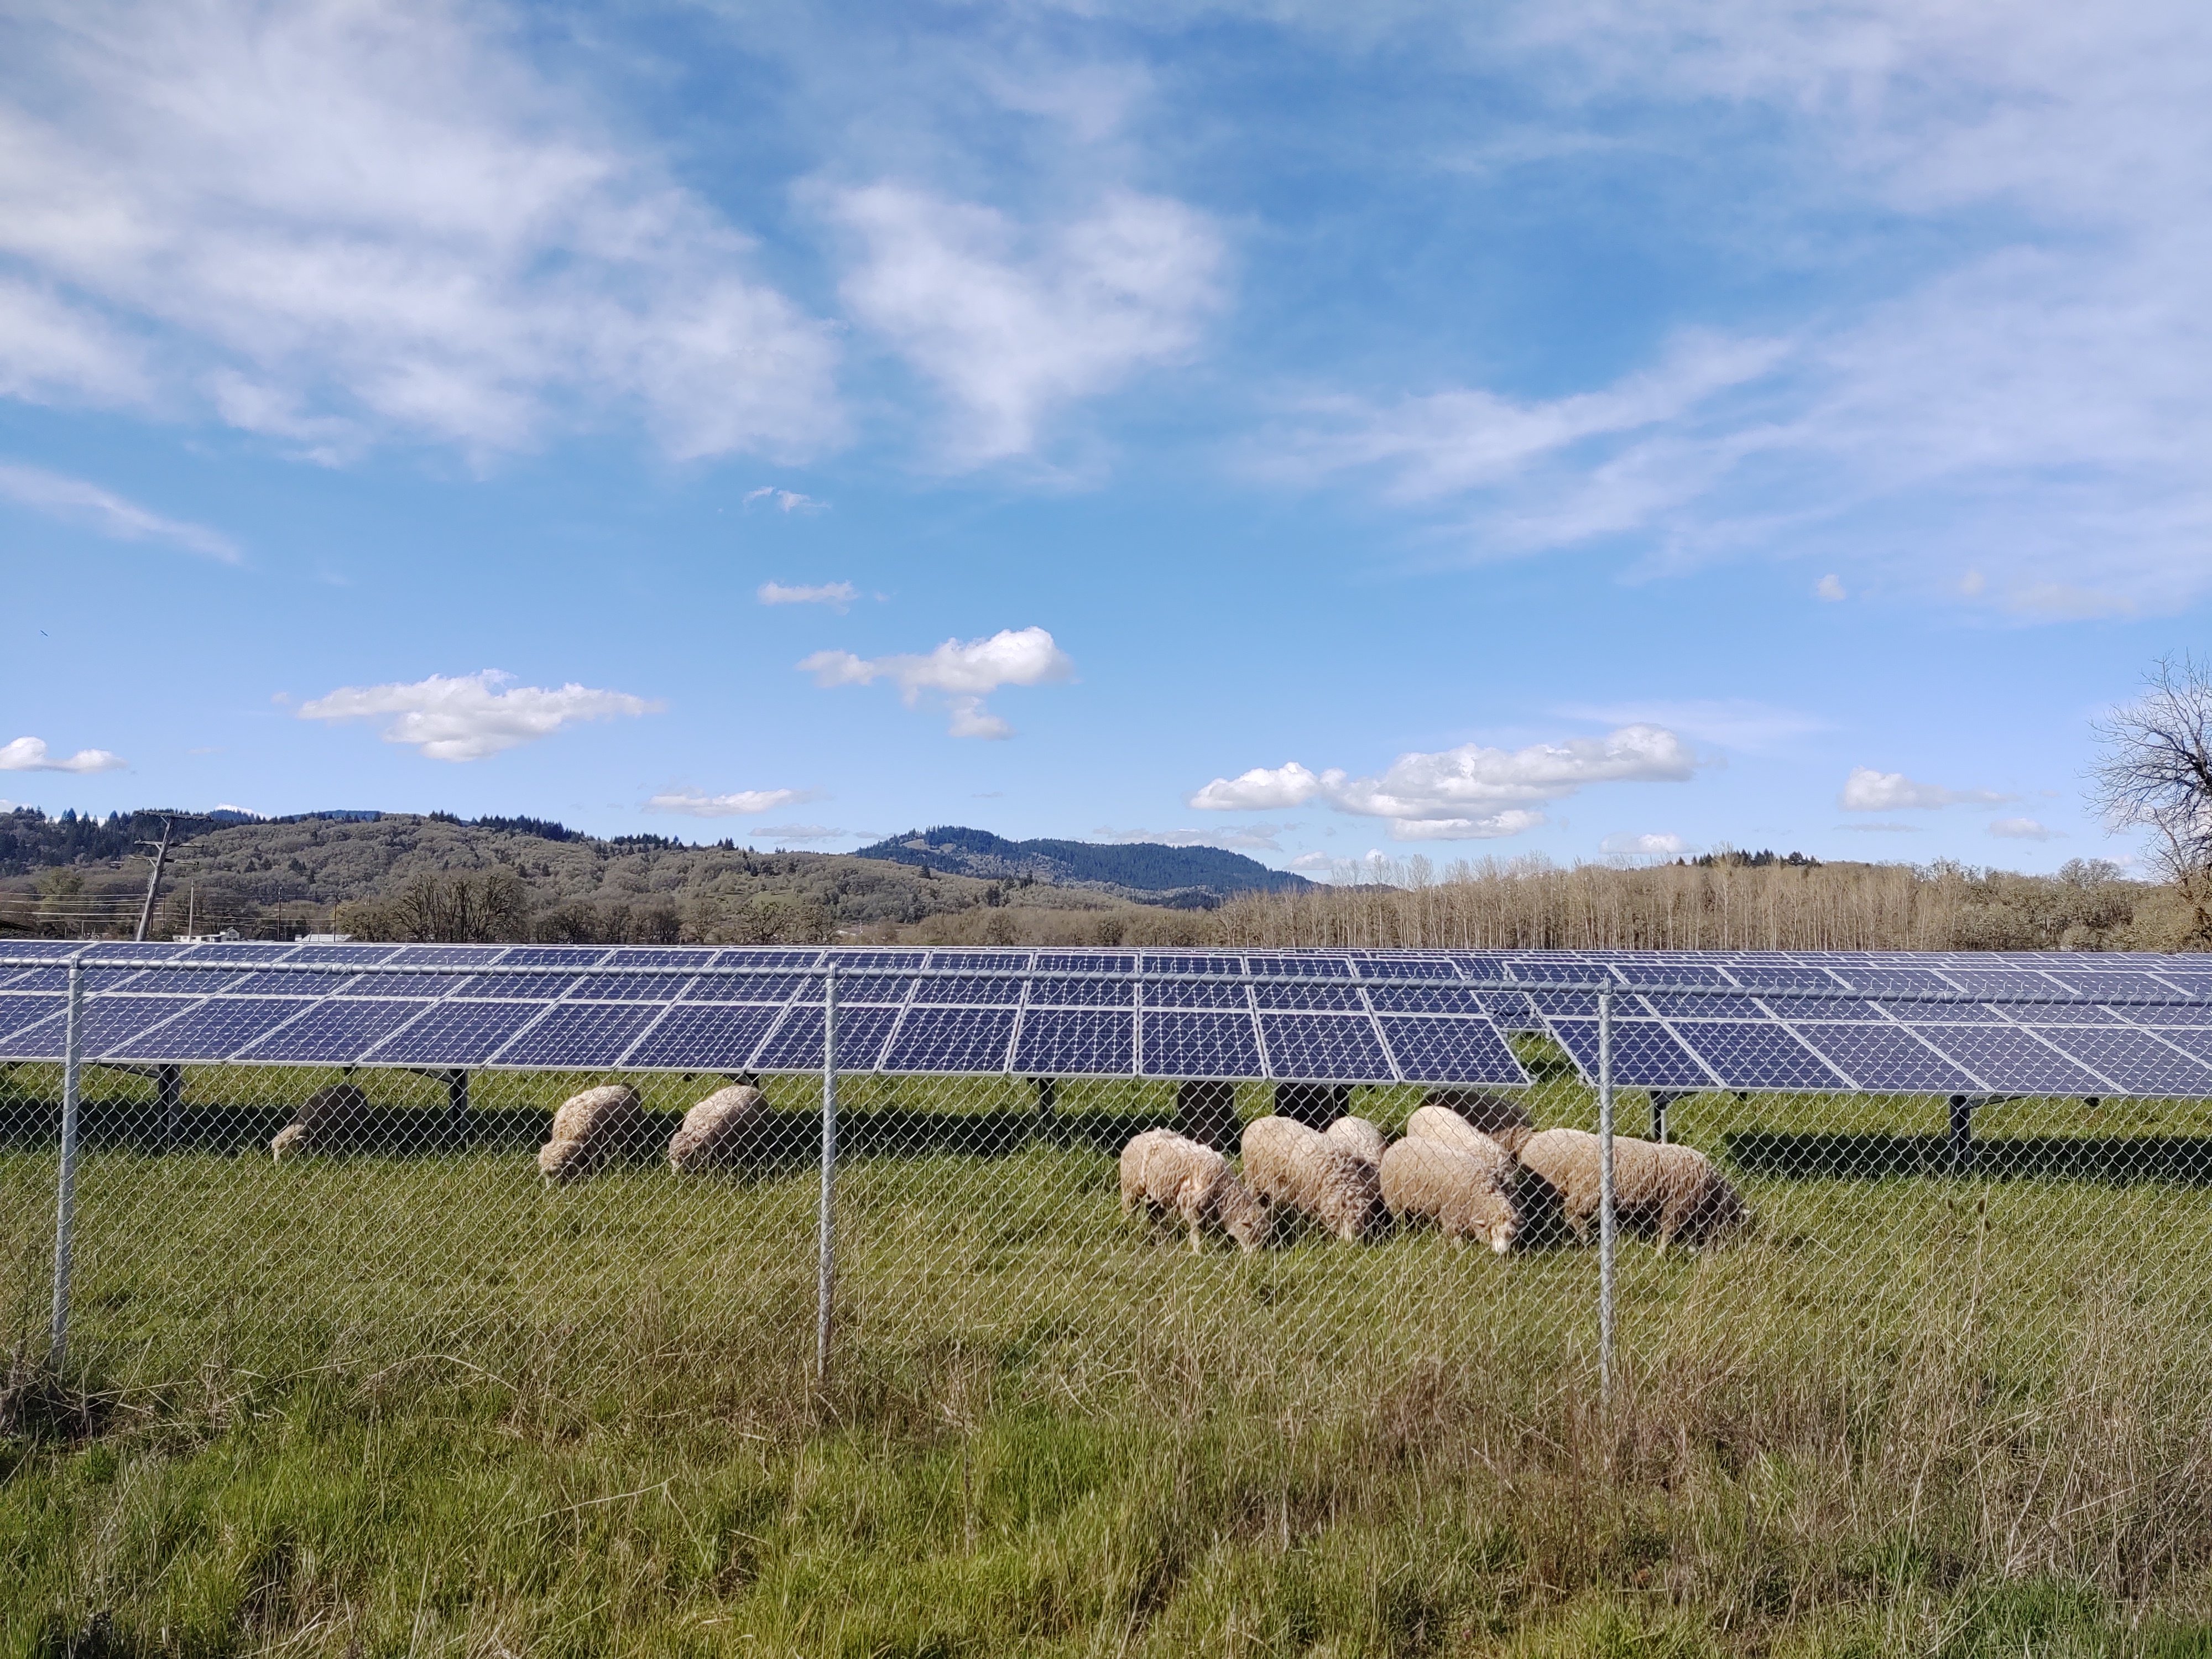 Sheep and solar panels. Source: Oregon State University